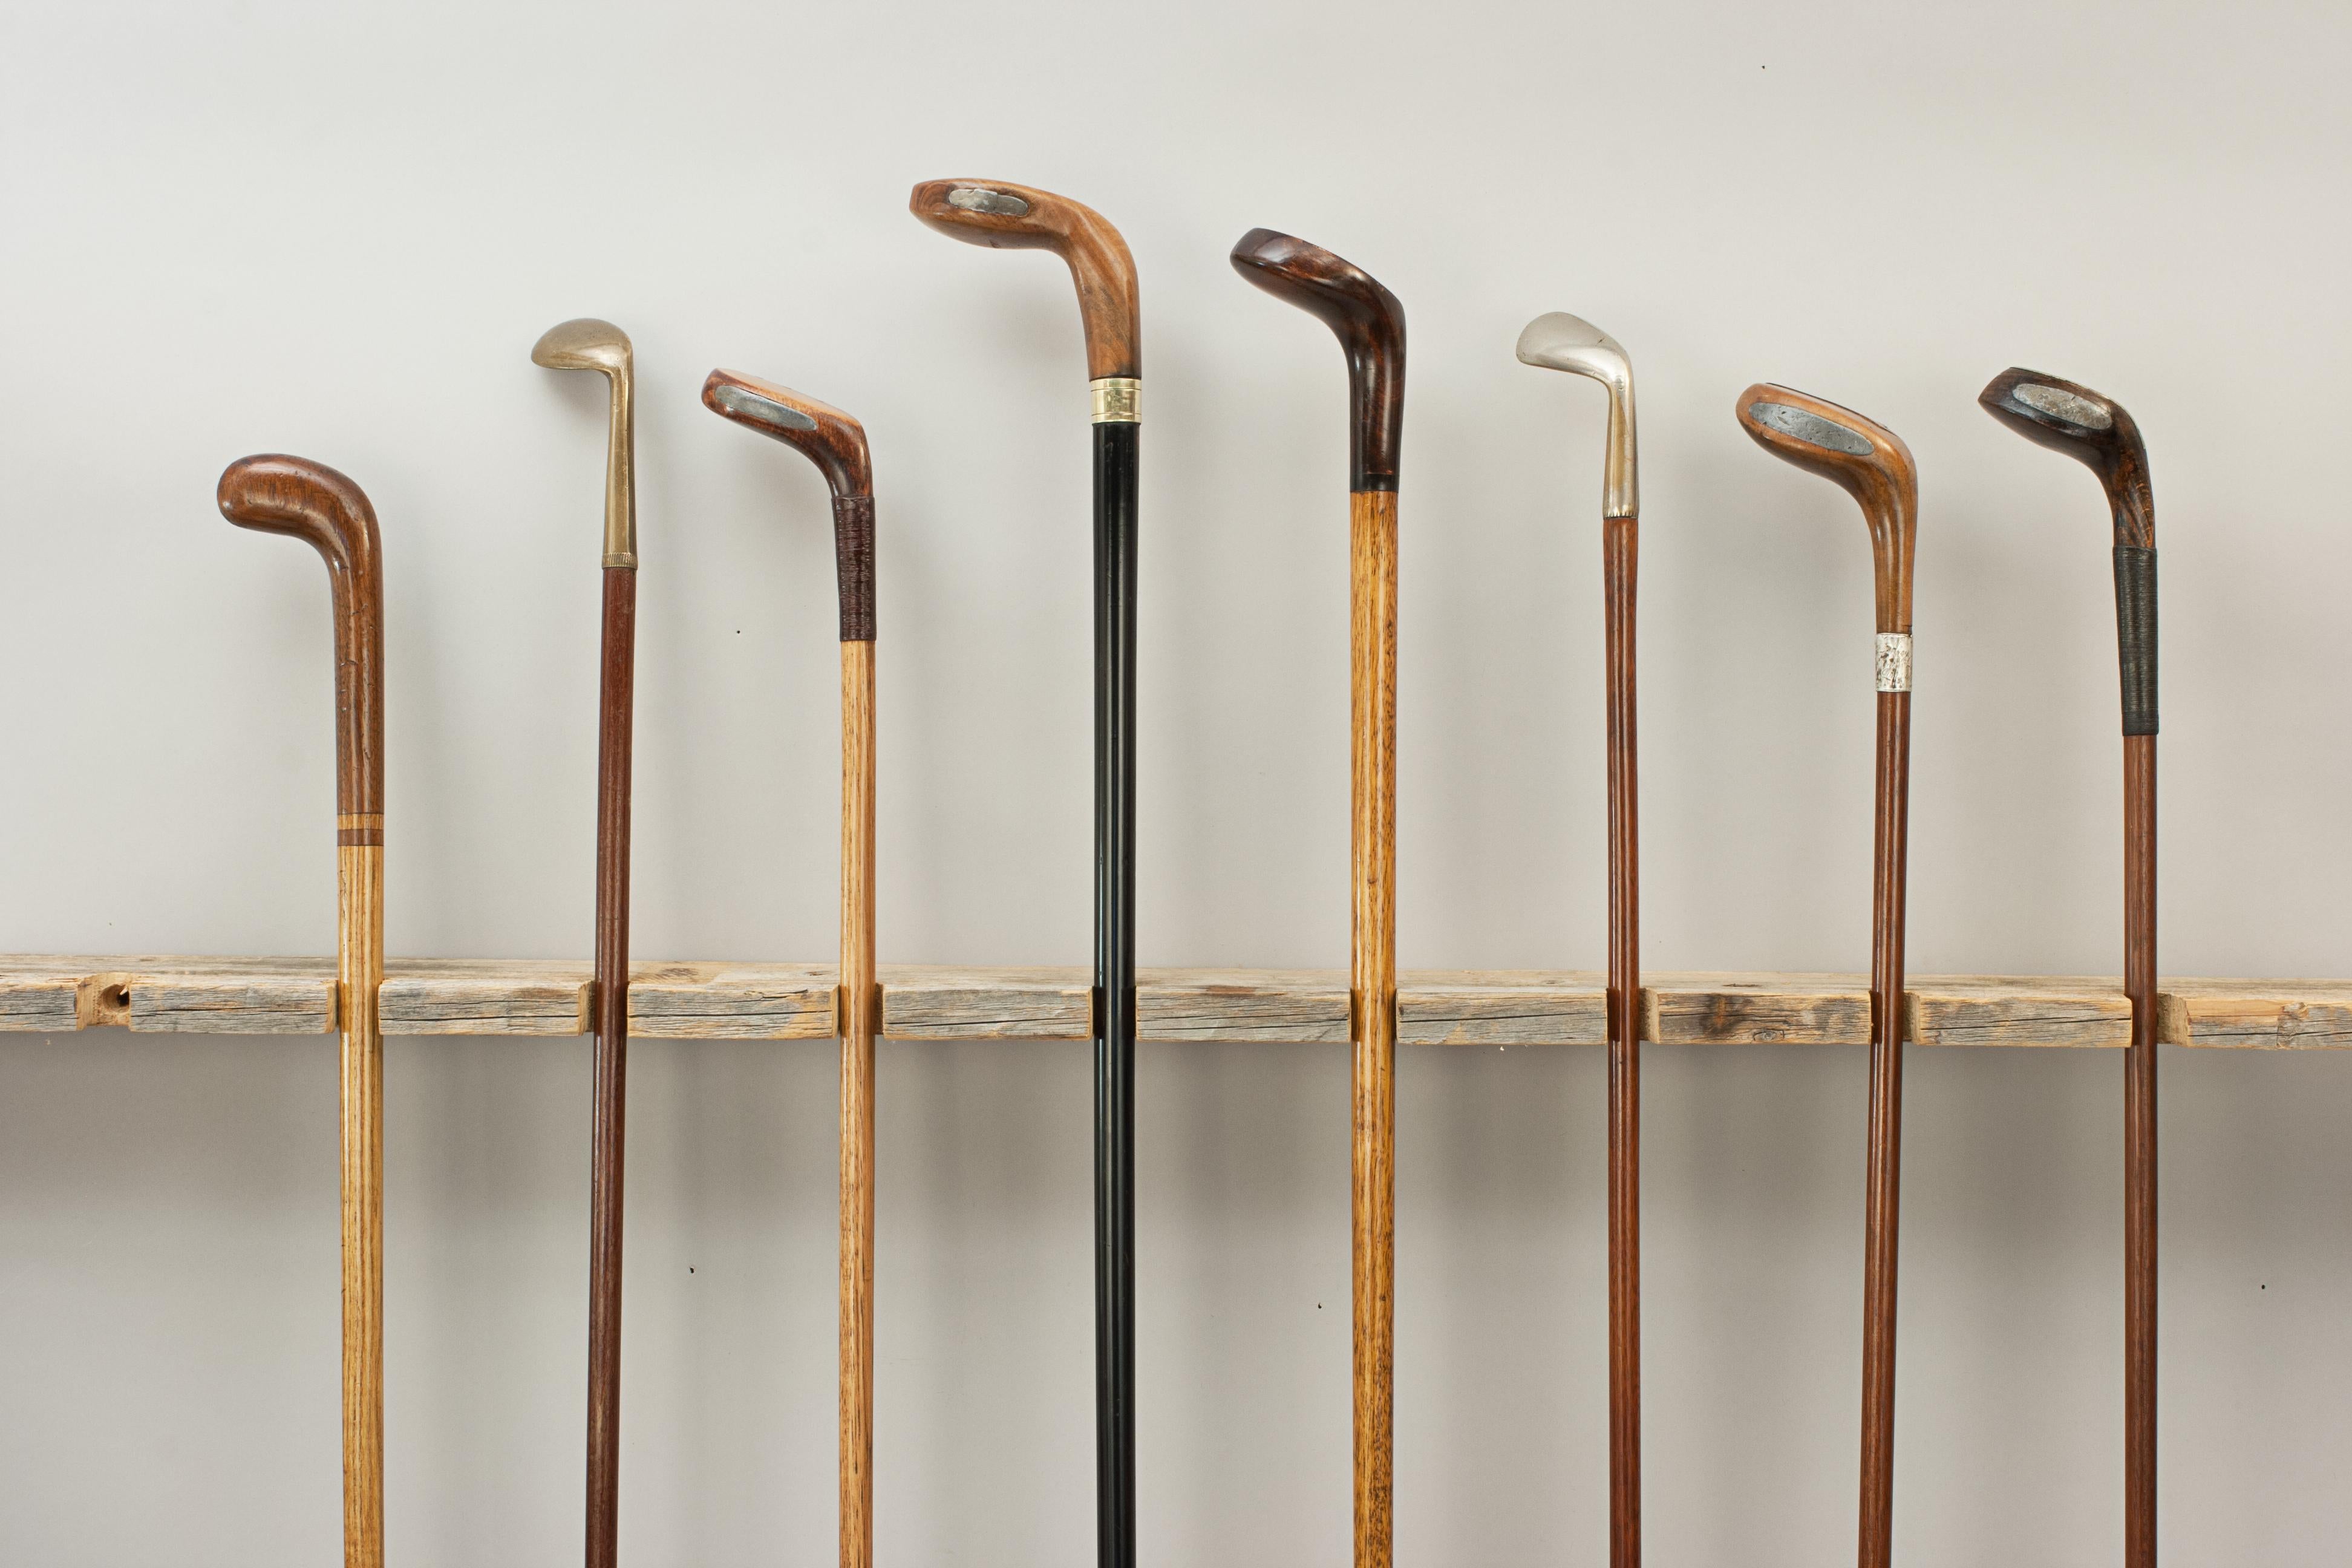 British Collection of 12 Vintage Golf Club Walking Sticks, Sunday Sticks